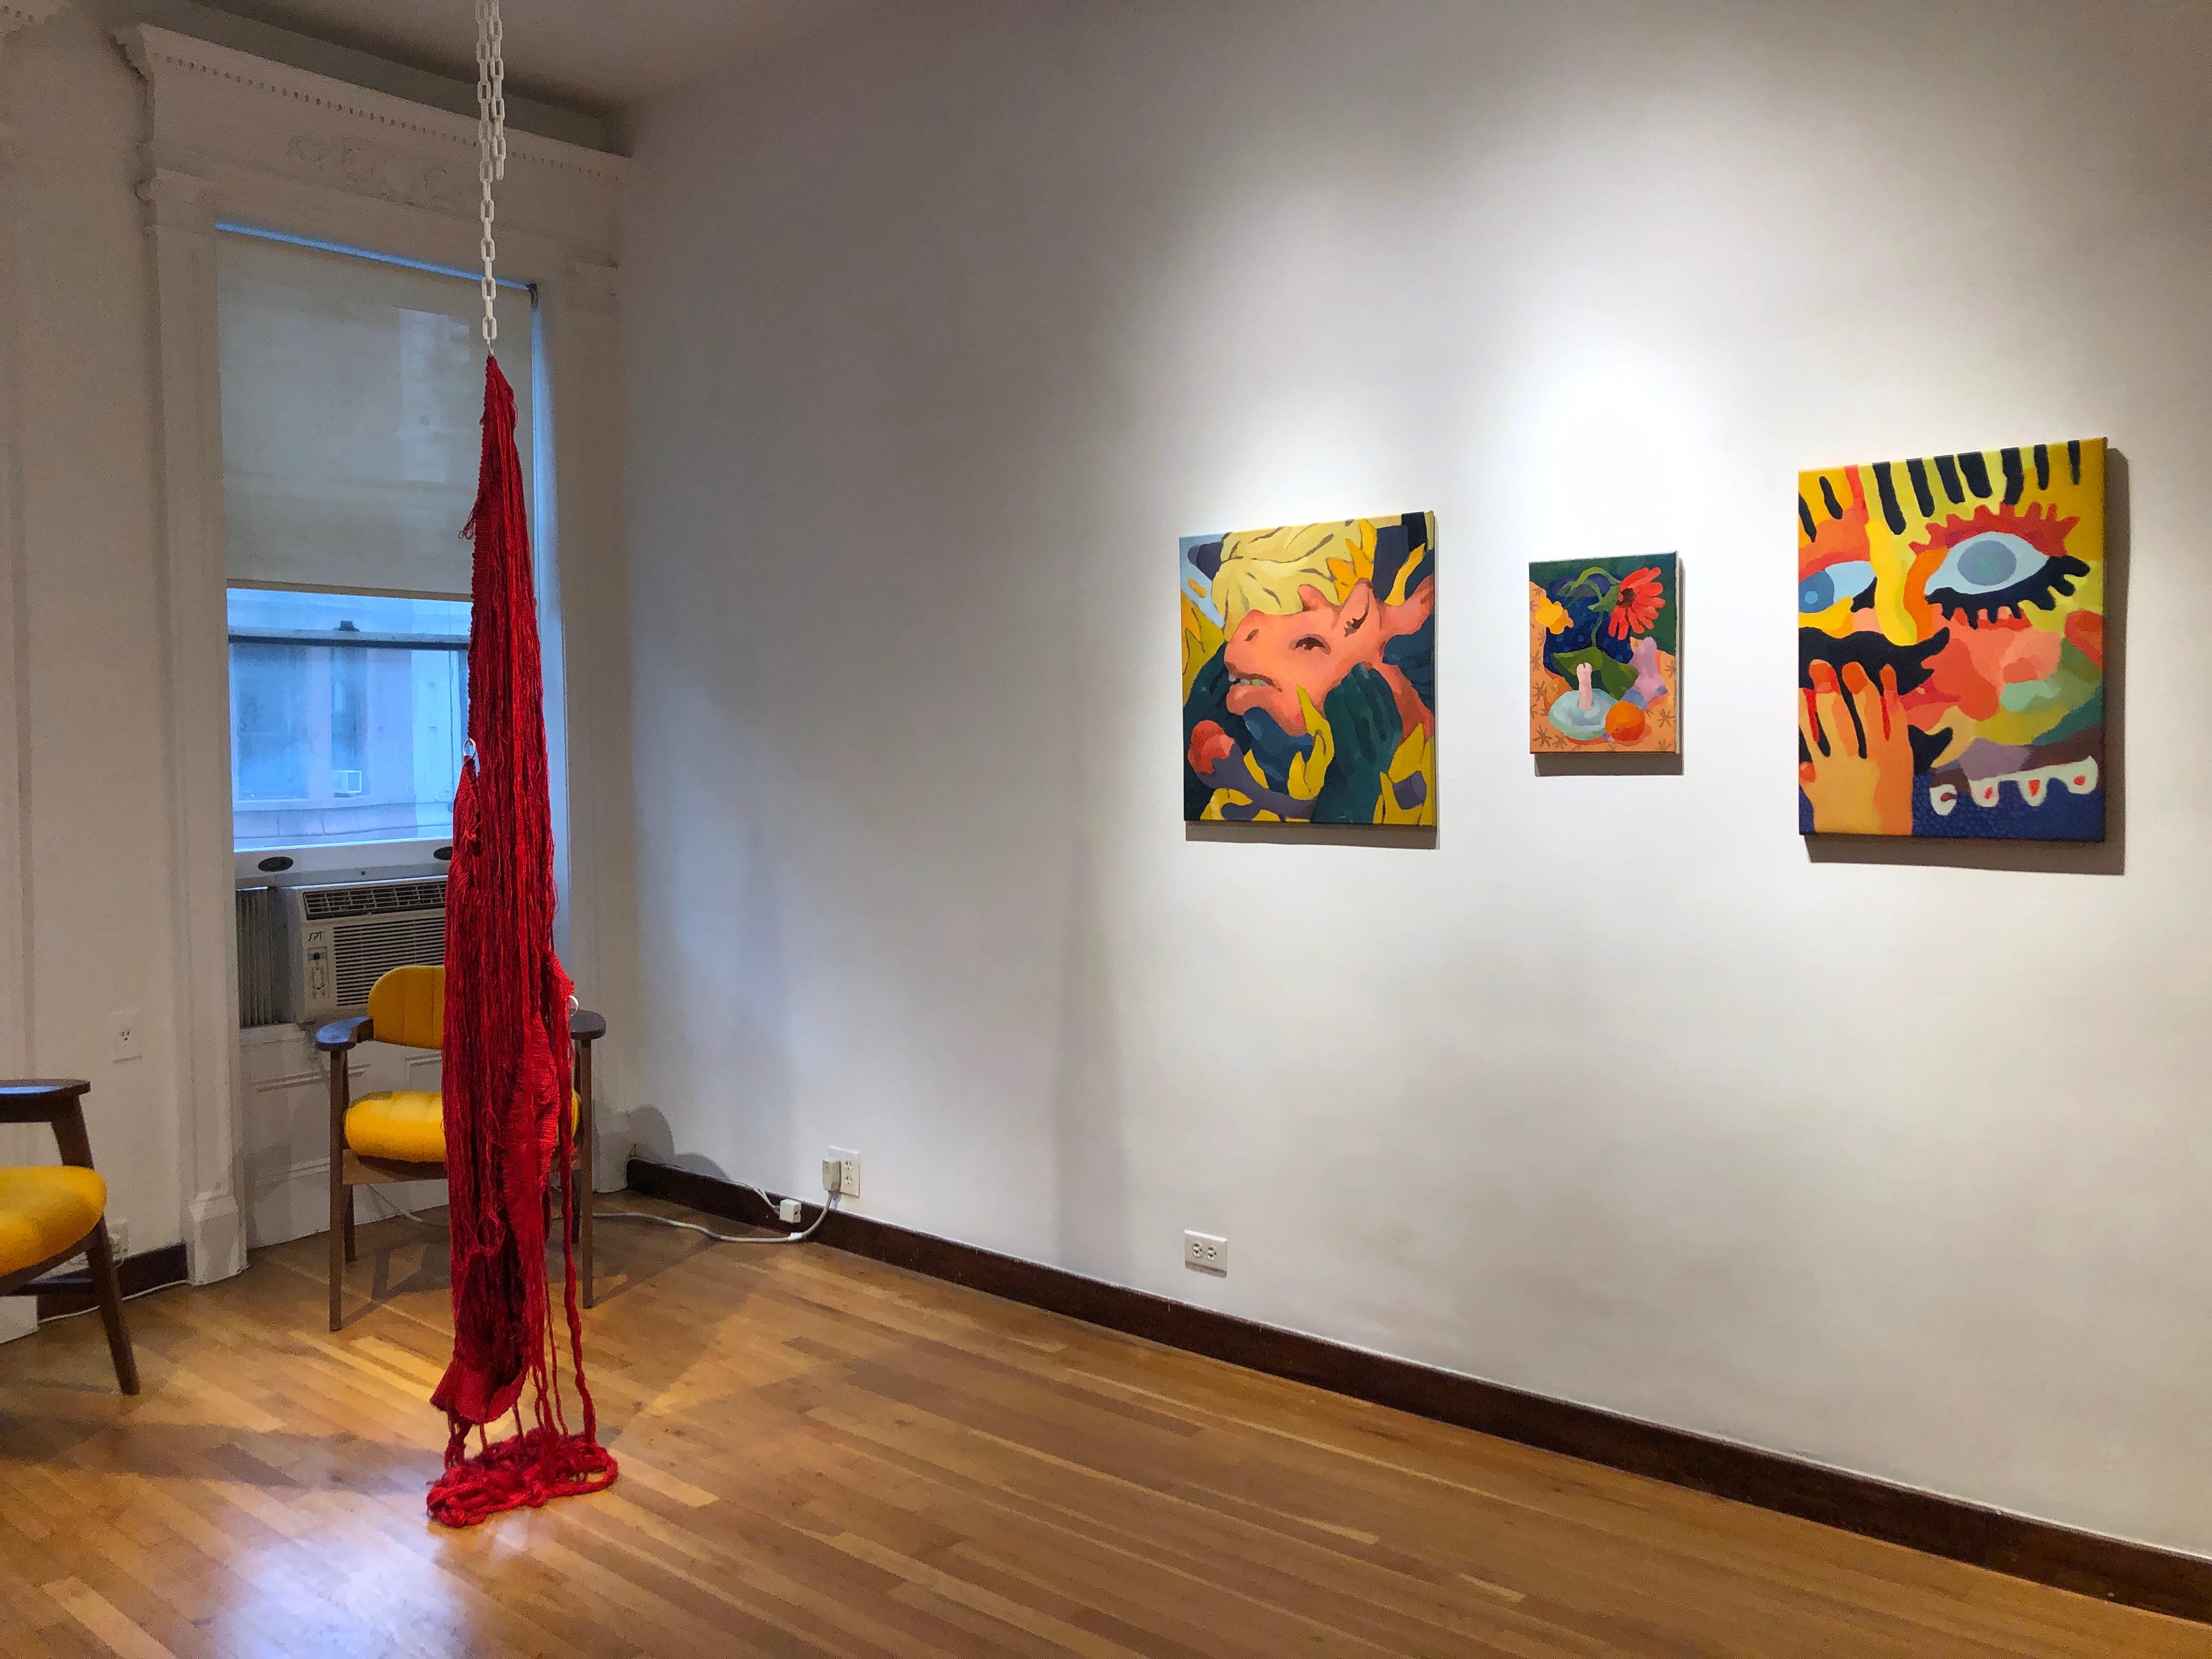 Spillage Pillar, red hanging fiber sculpture, textile art, abstract - Abstract Sculpture by Brendan Kenny